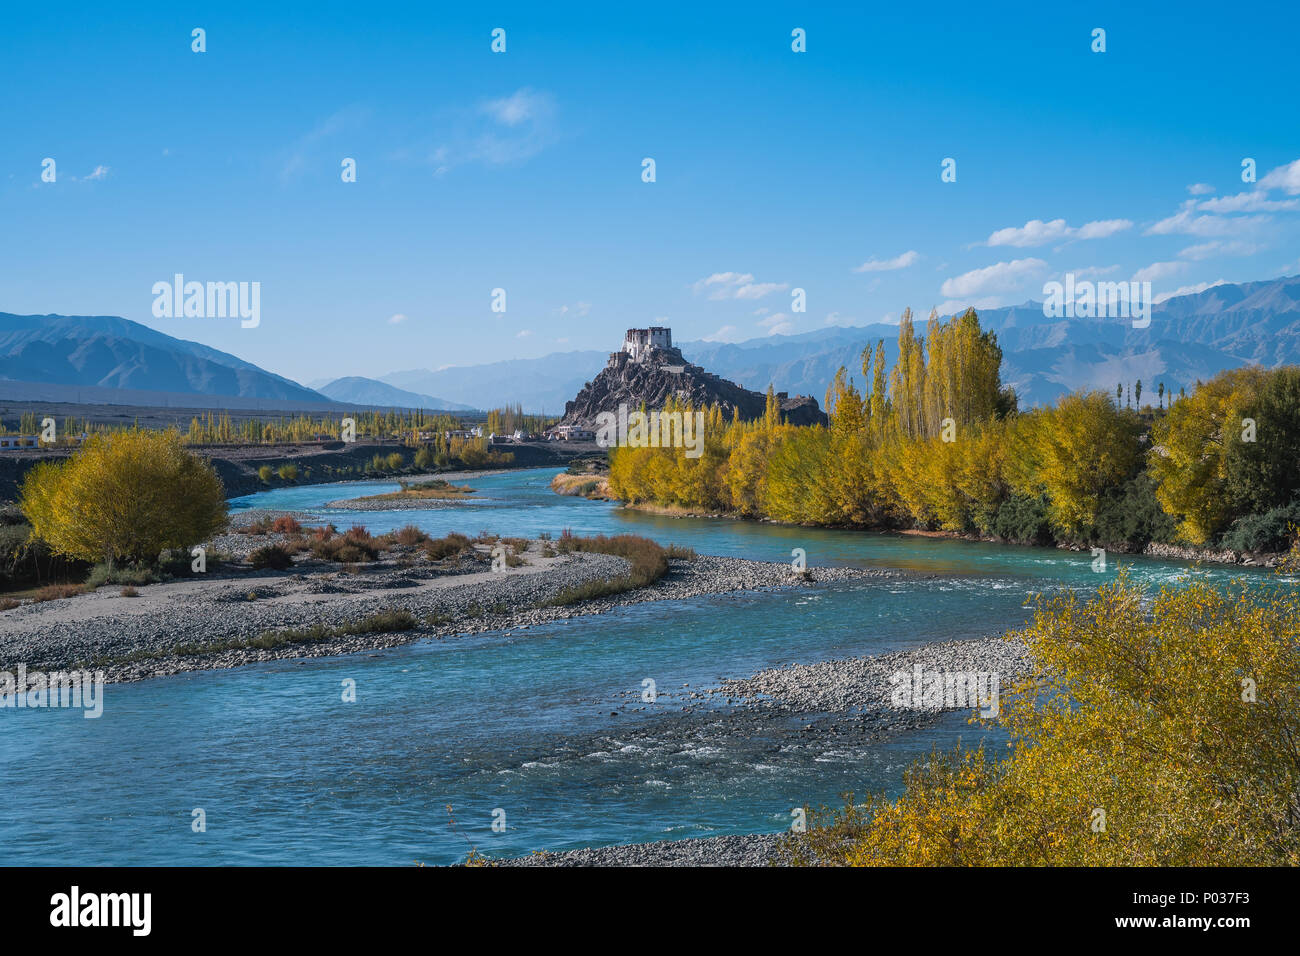 Stakna monastery with Indus river in Autumn season Stock Photo